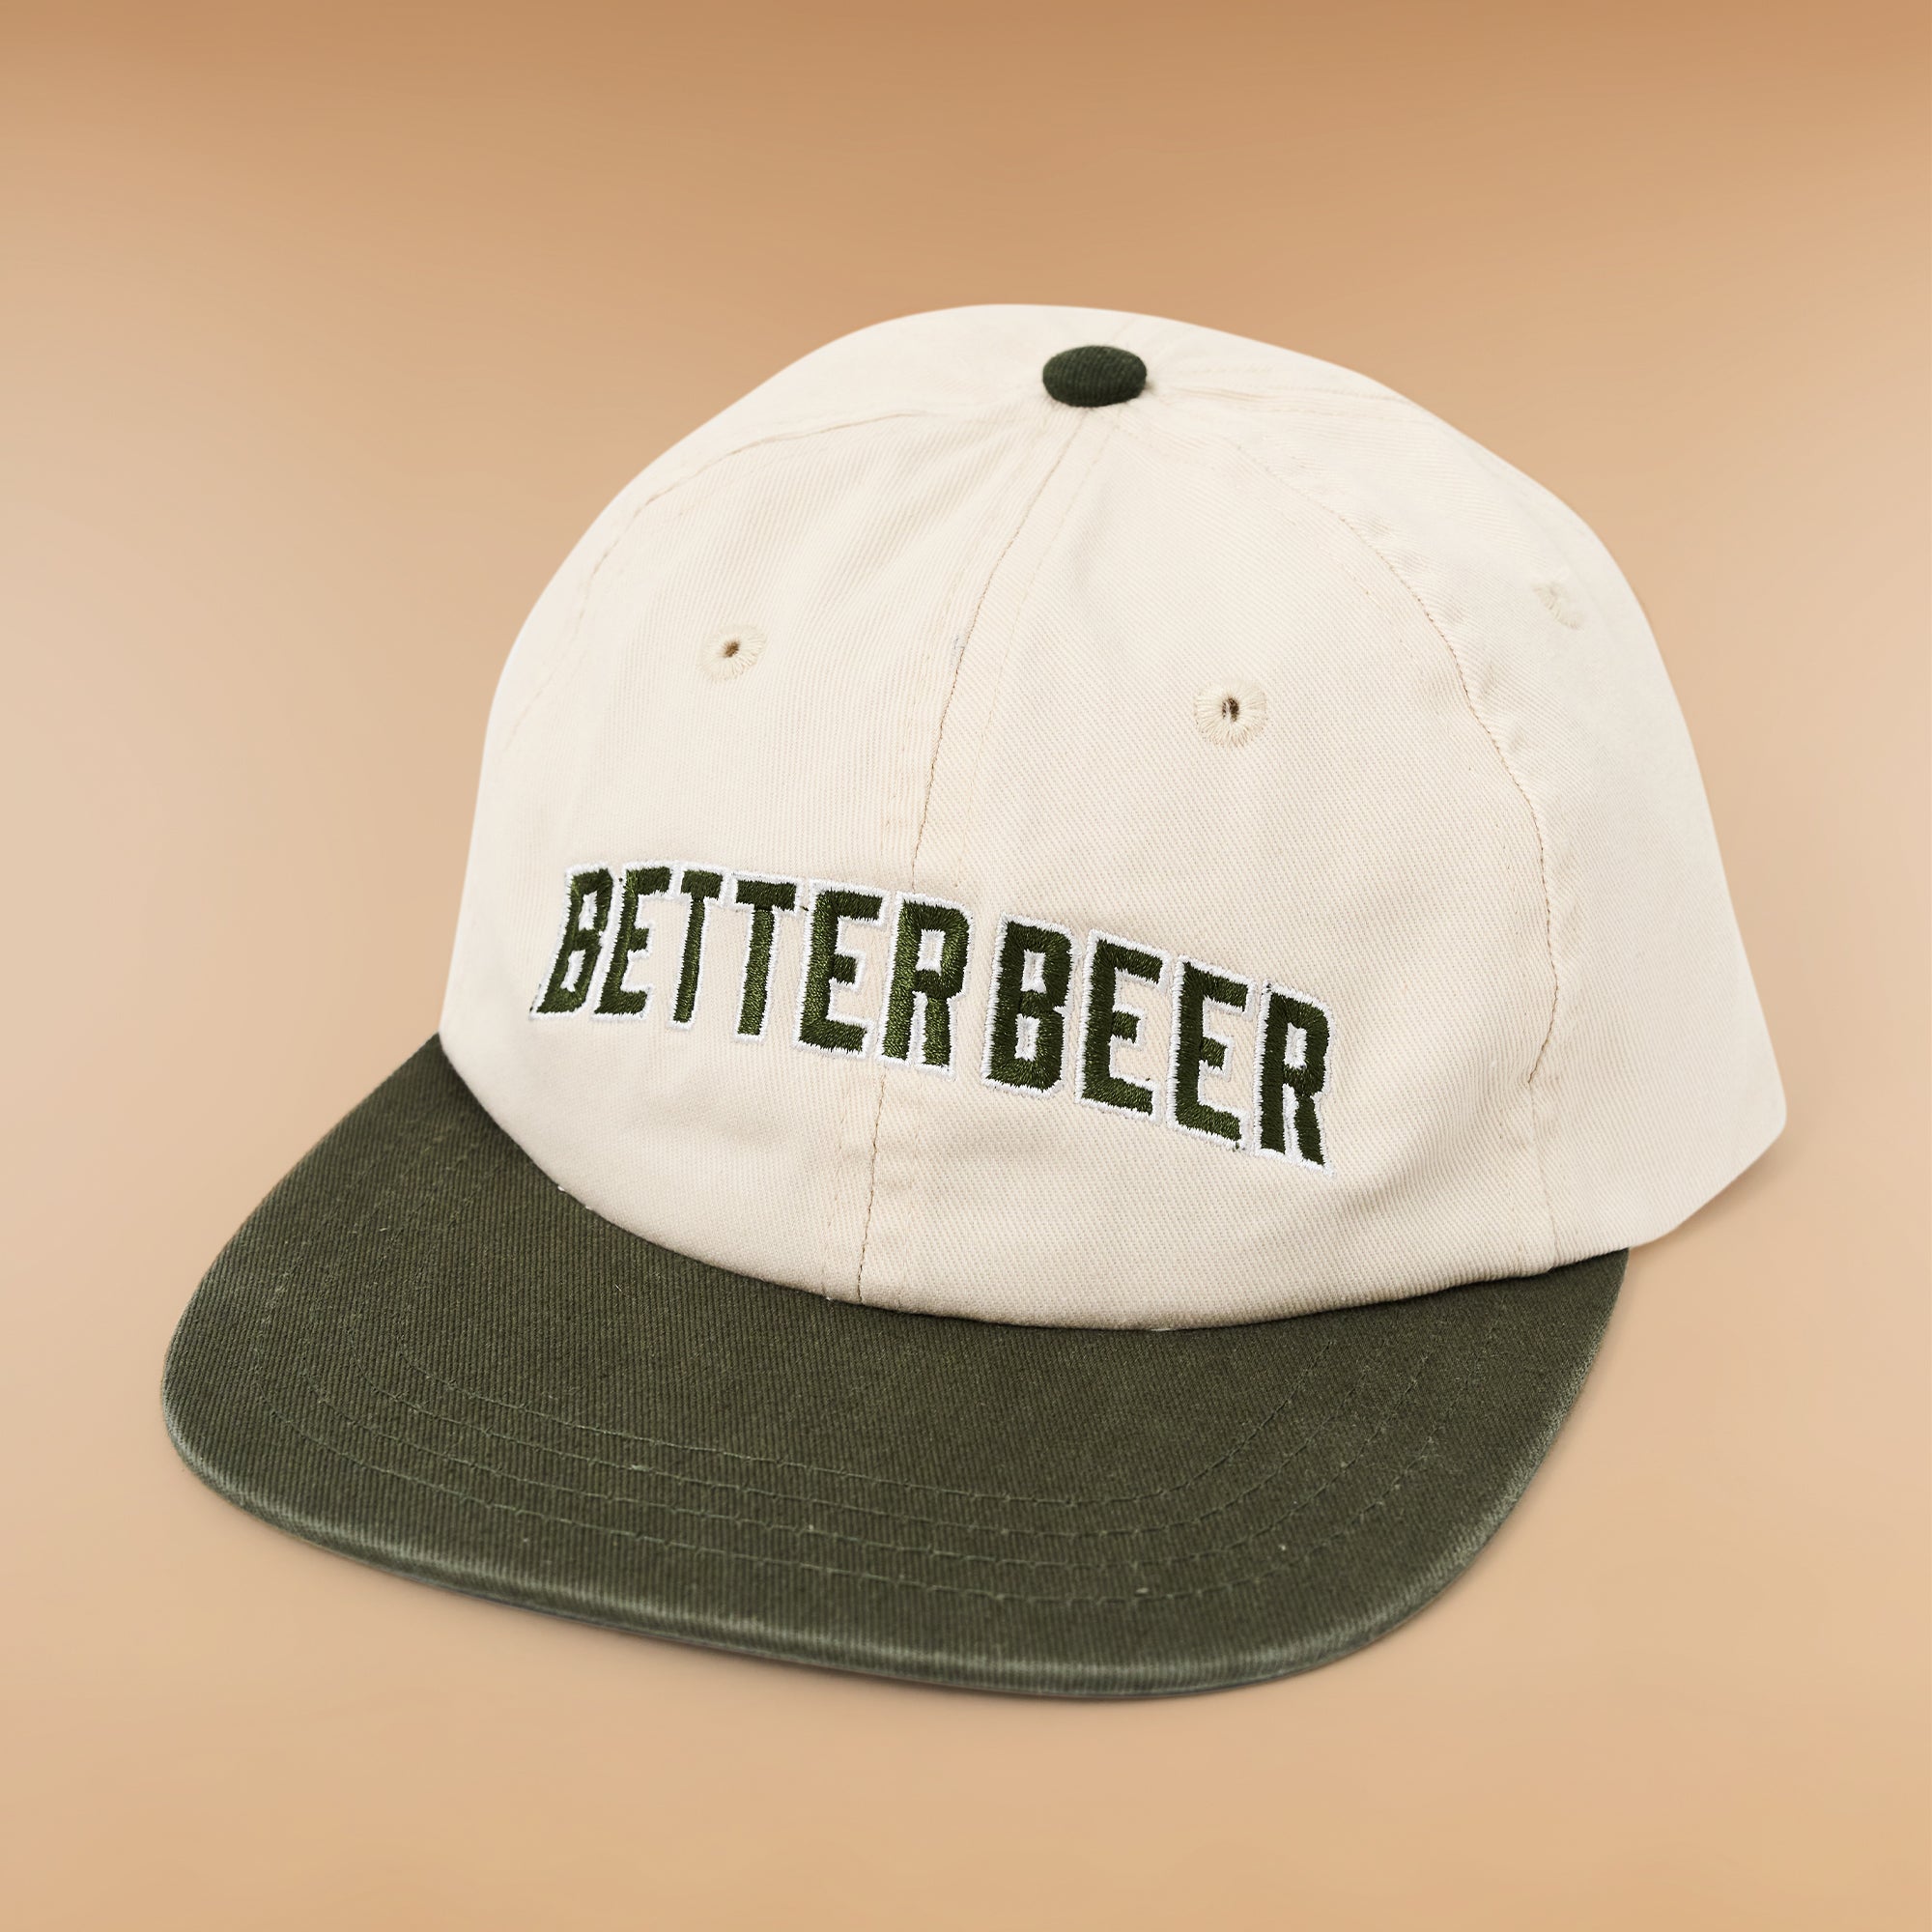 Better Beer Field Green / Off White Cap